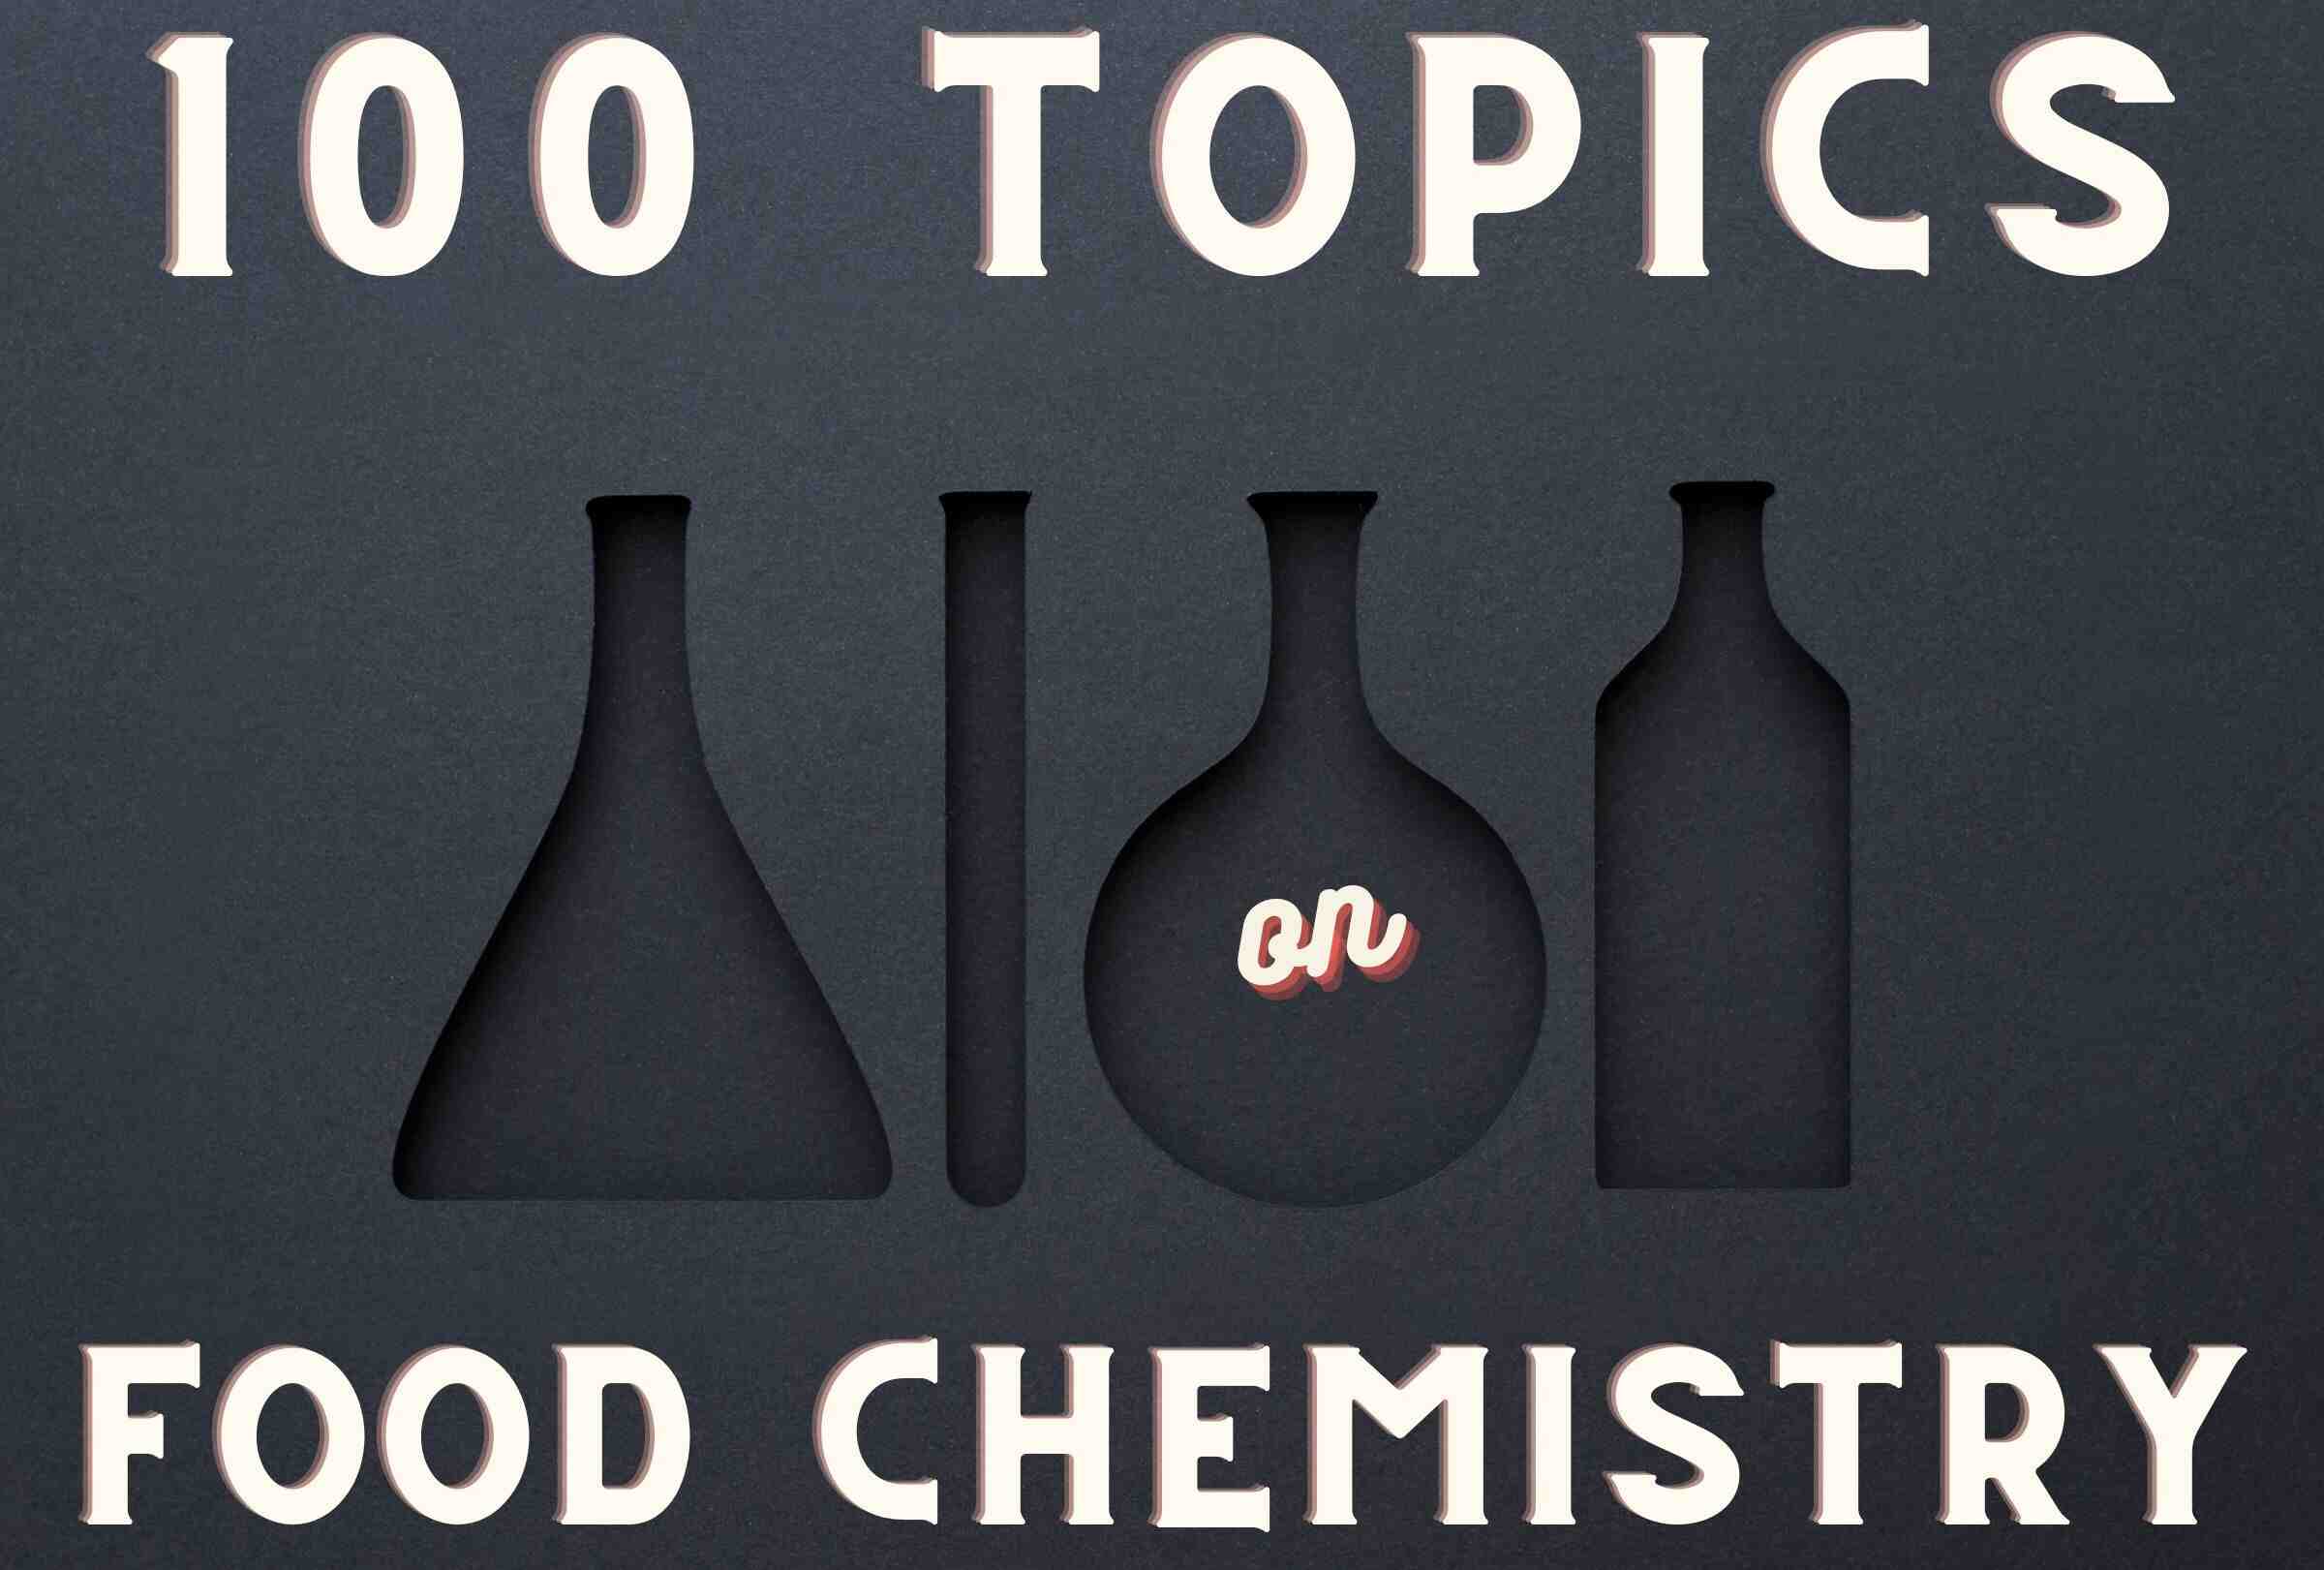 Food Chemistry Topics